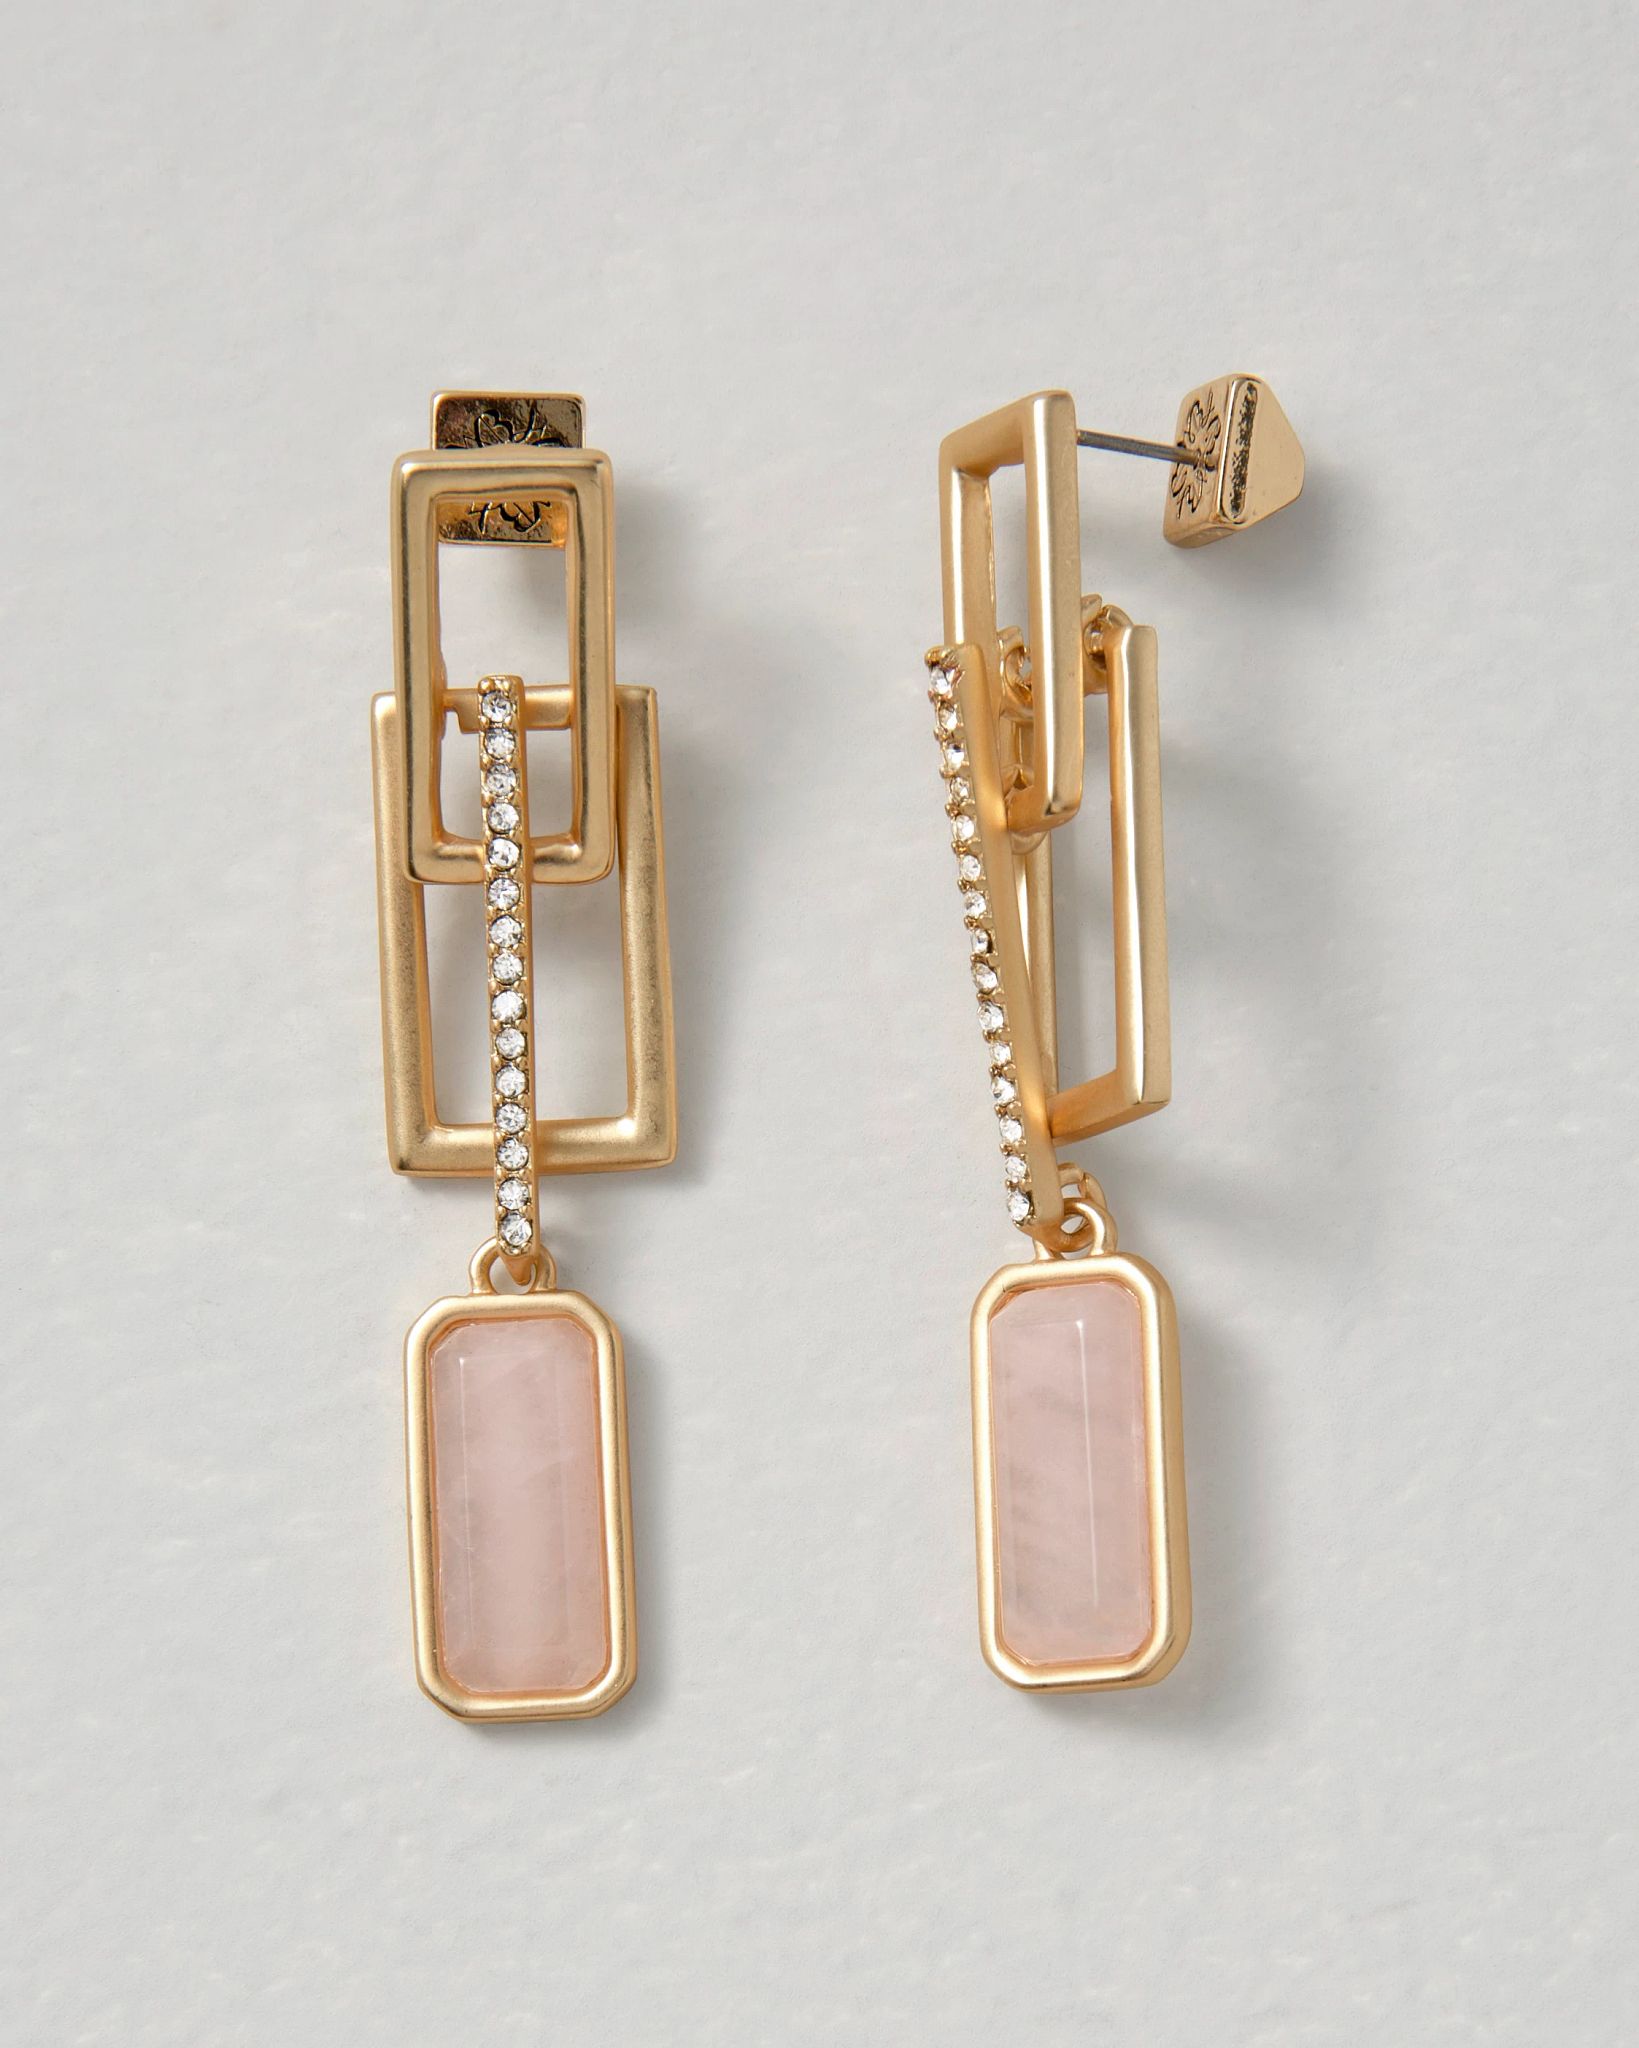 Goldtone Rose Quartz Drop Earrings click to view larger image.